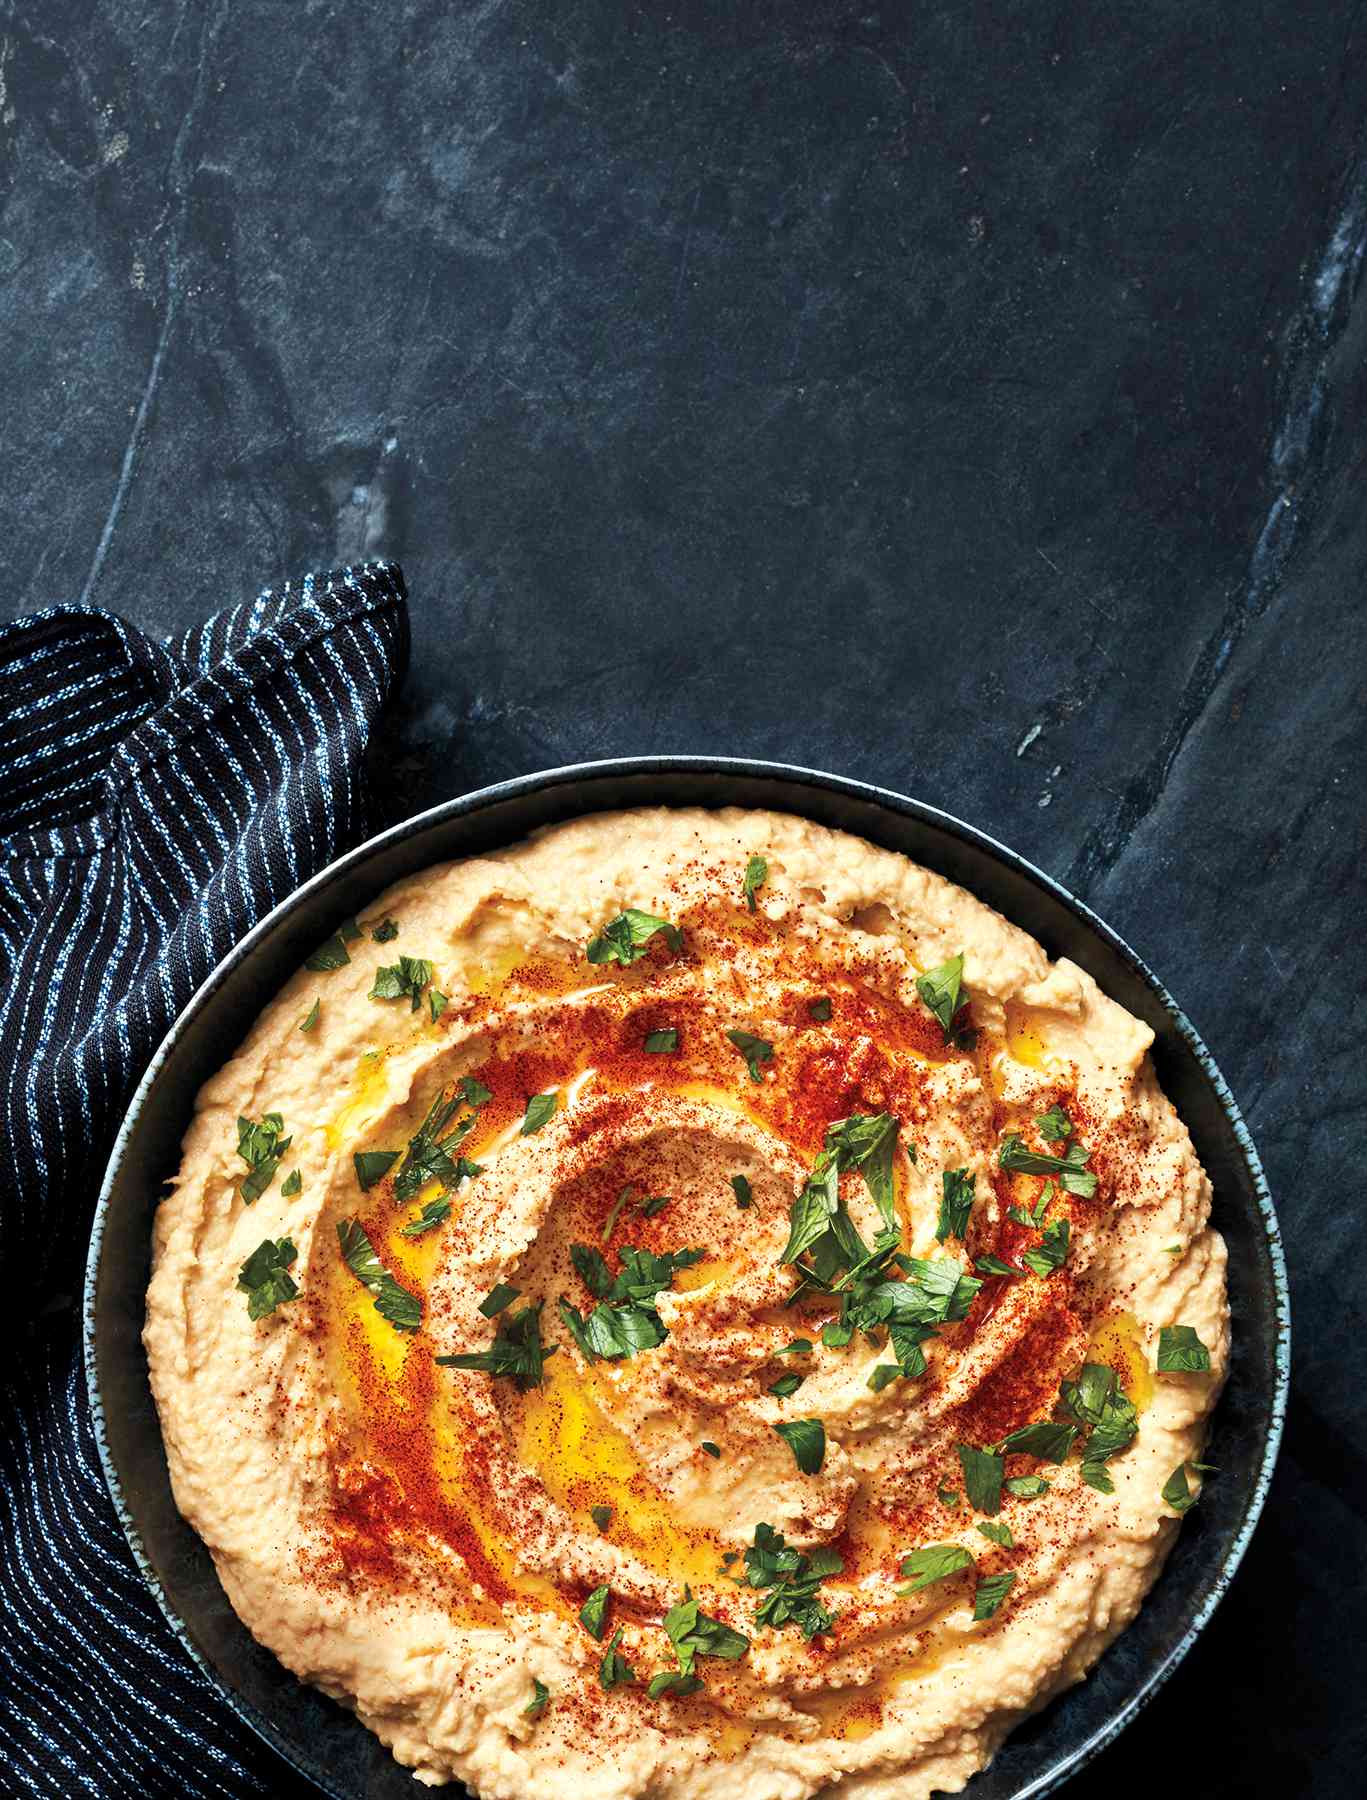 Make It Yourself: Hummus 